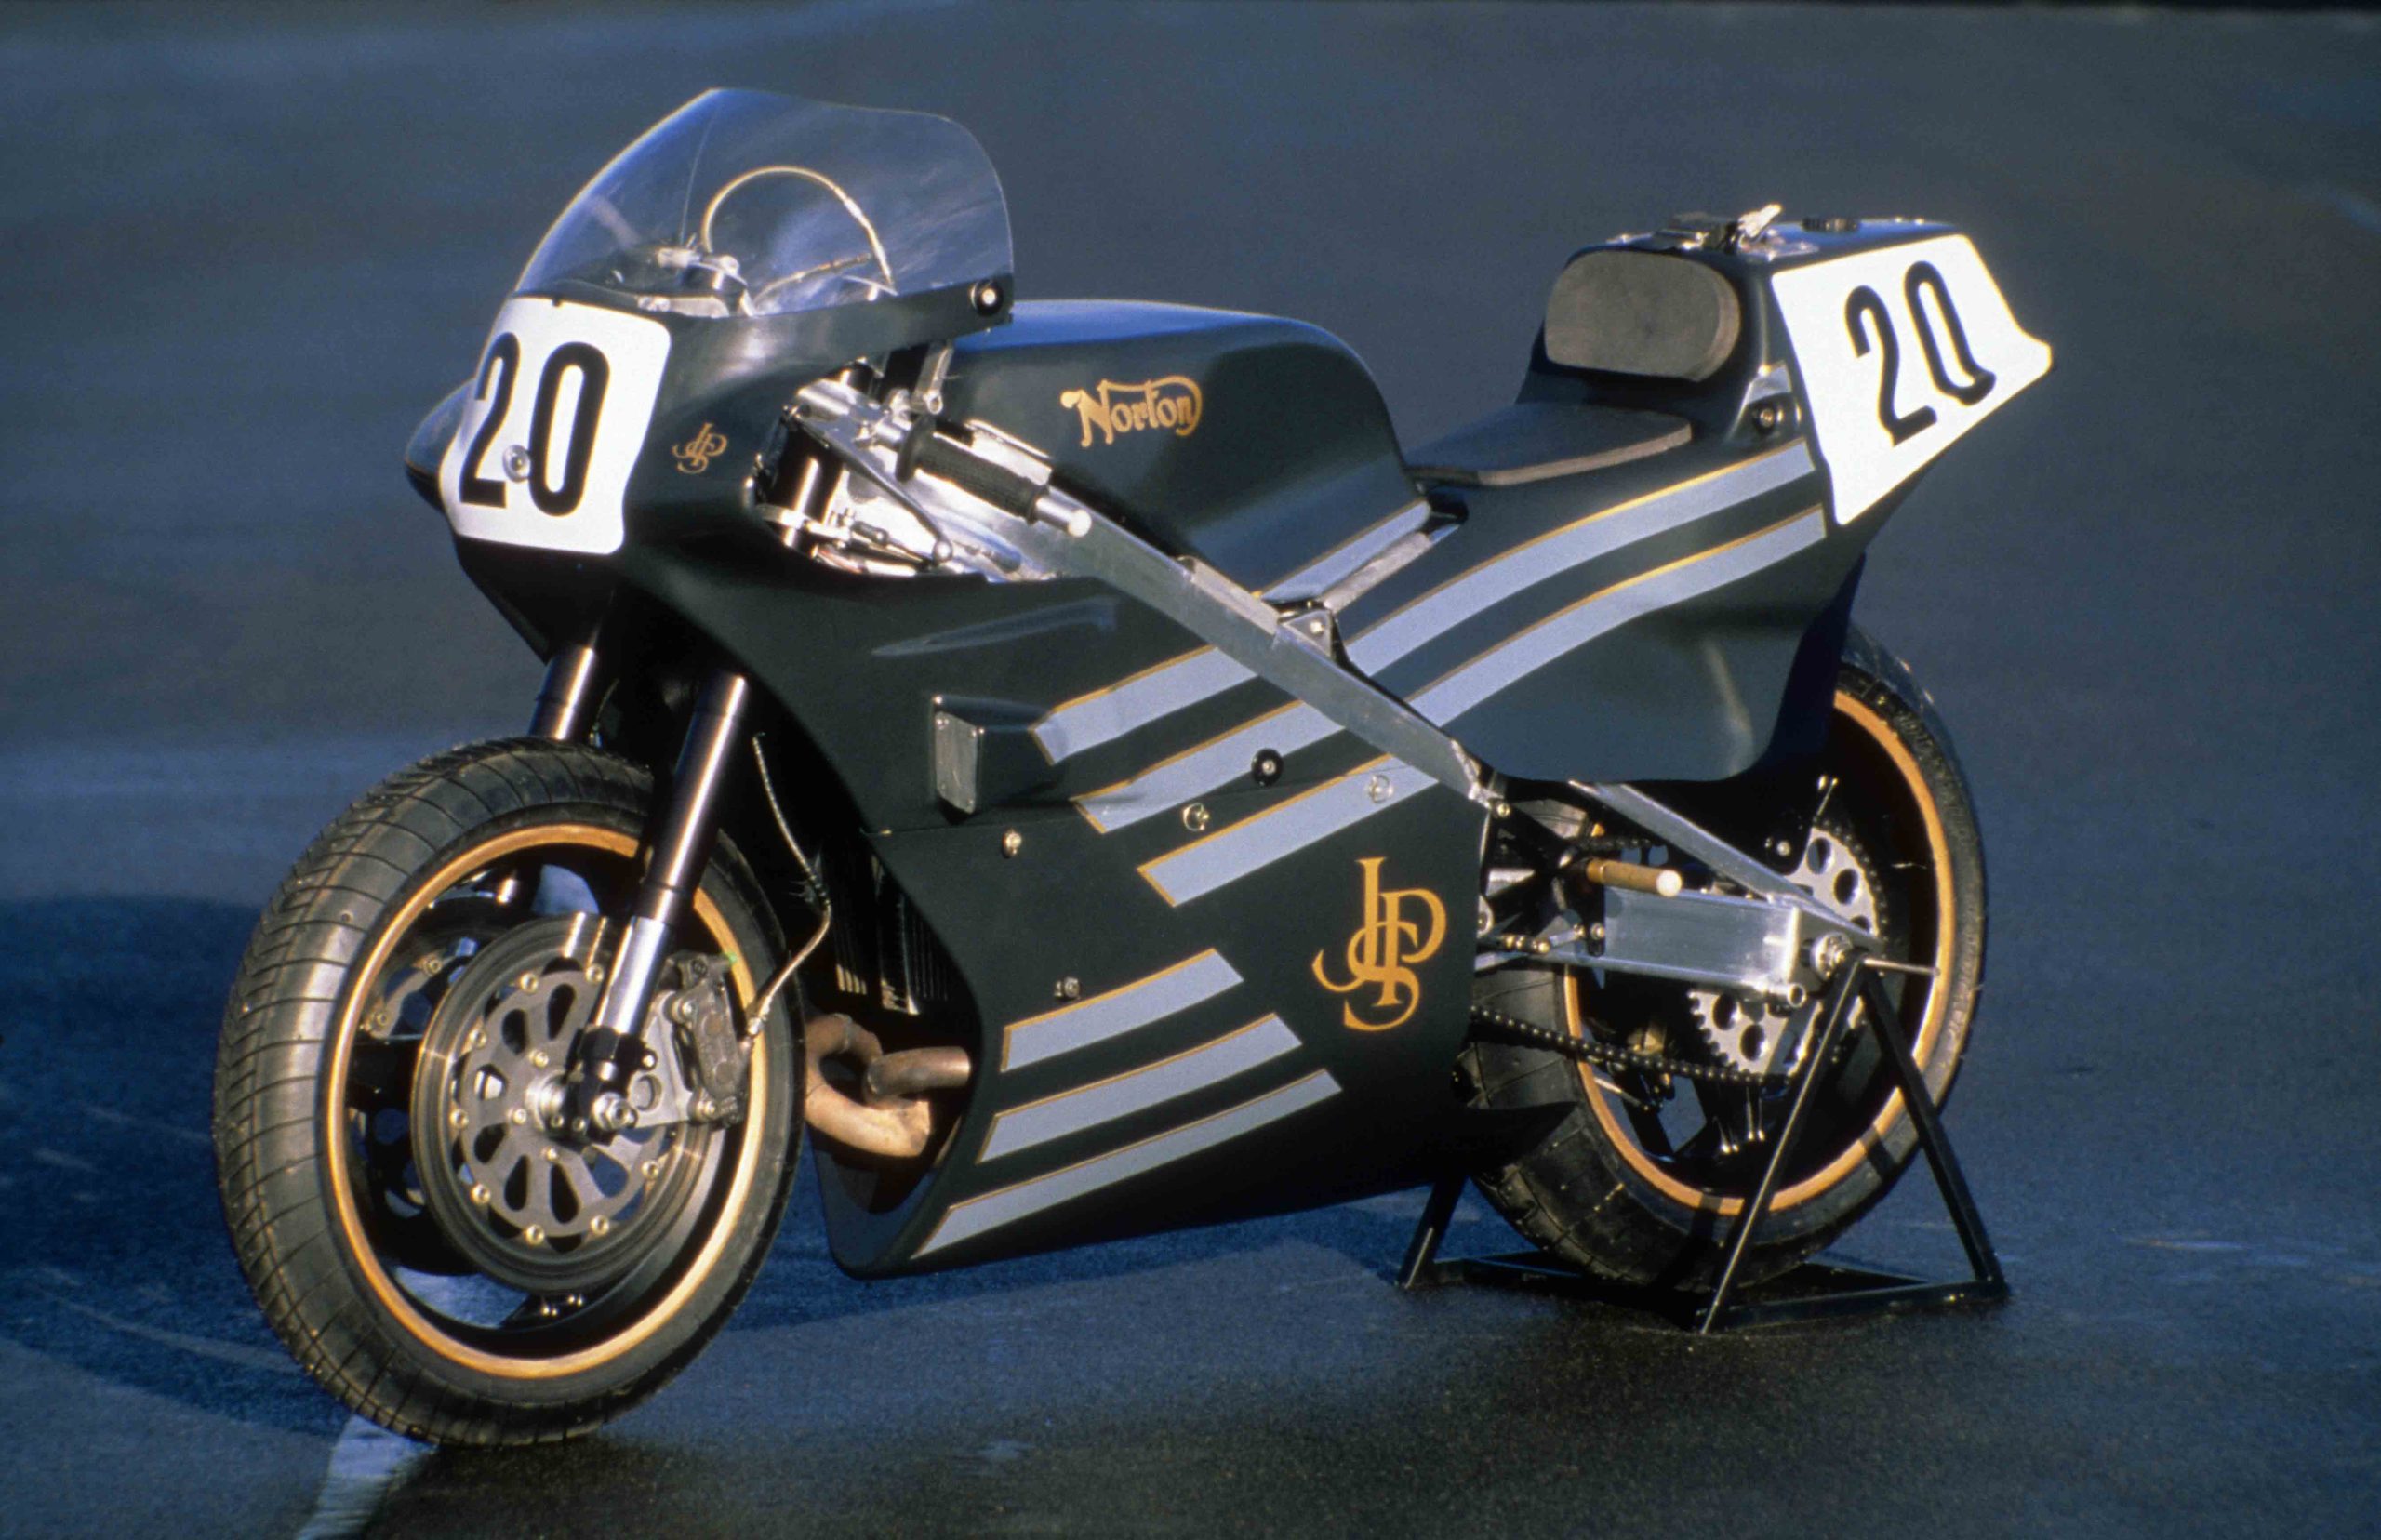 Norton 588 race bike